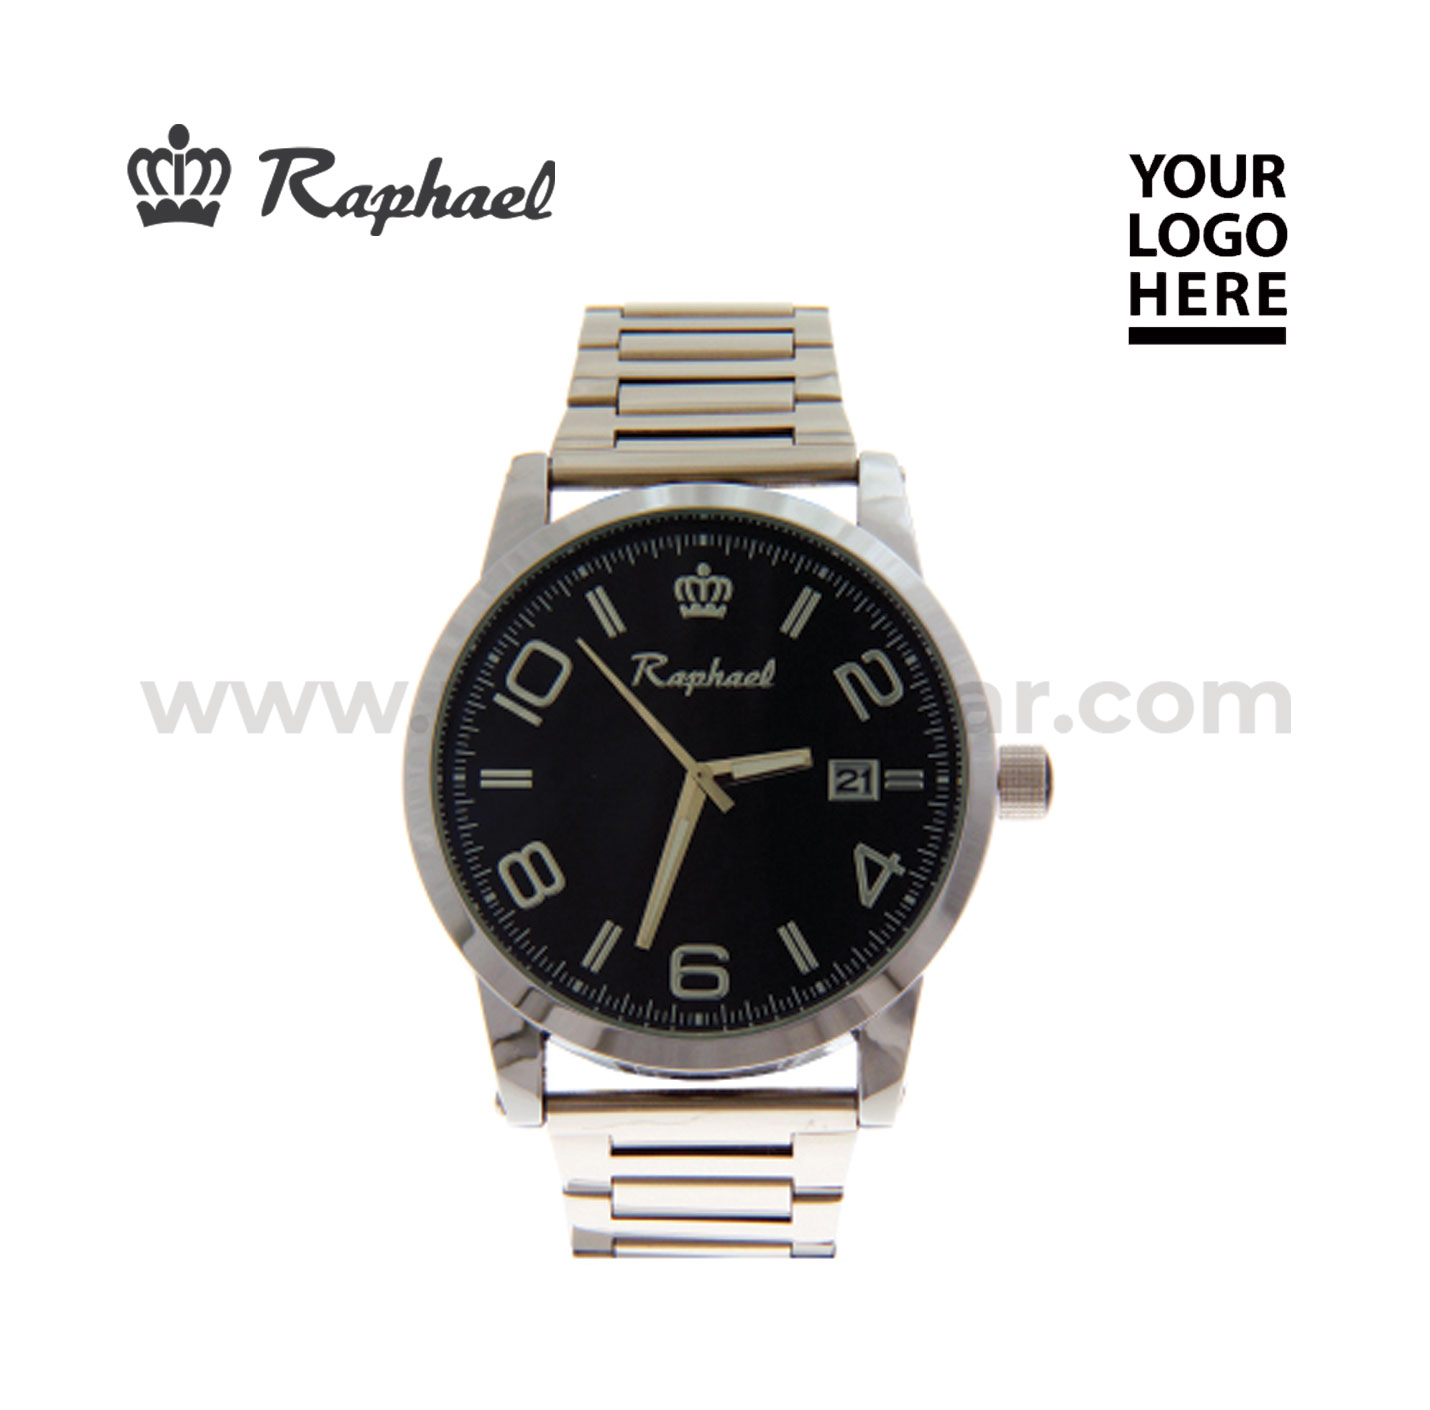 Raphael Logo Watches